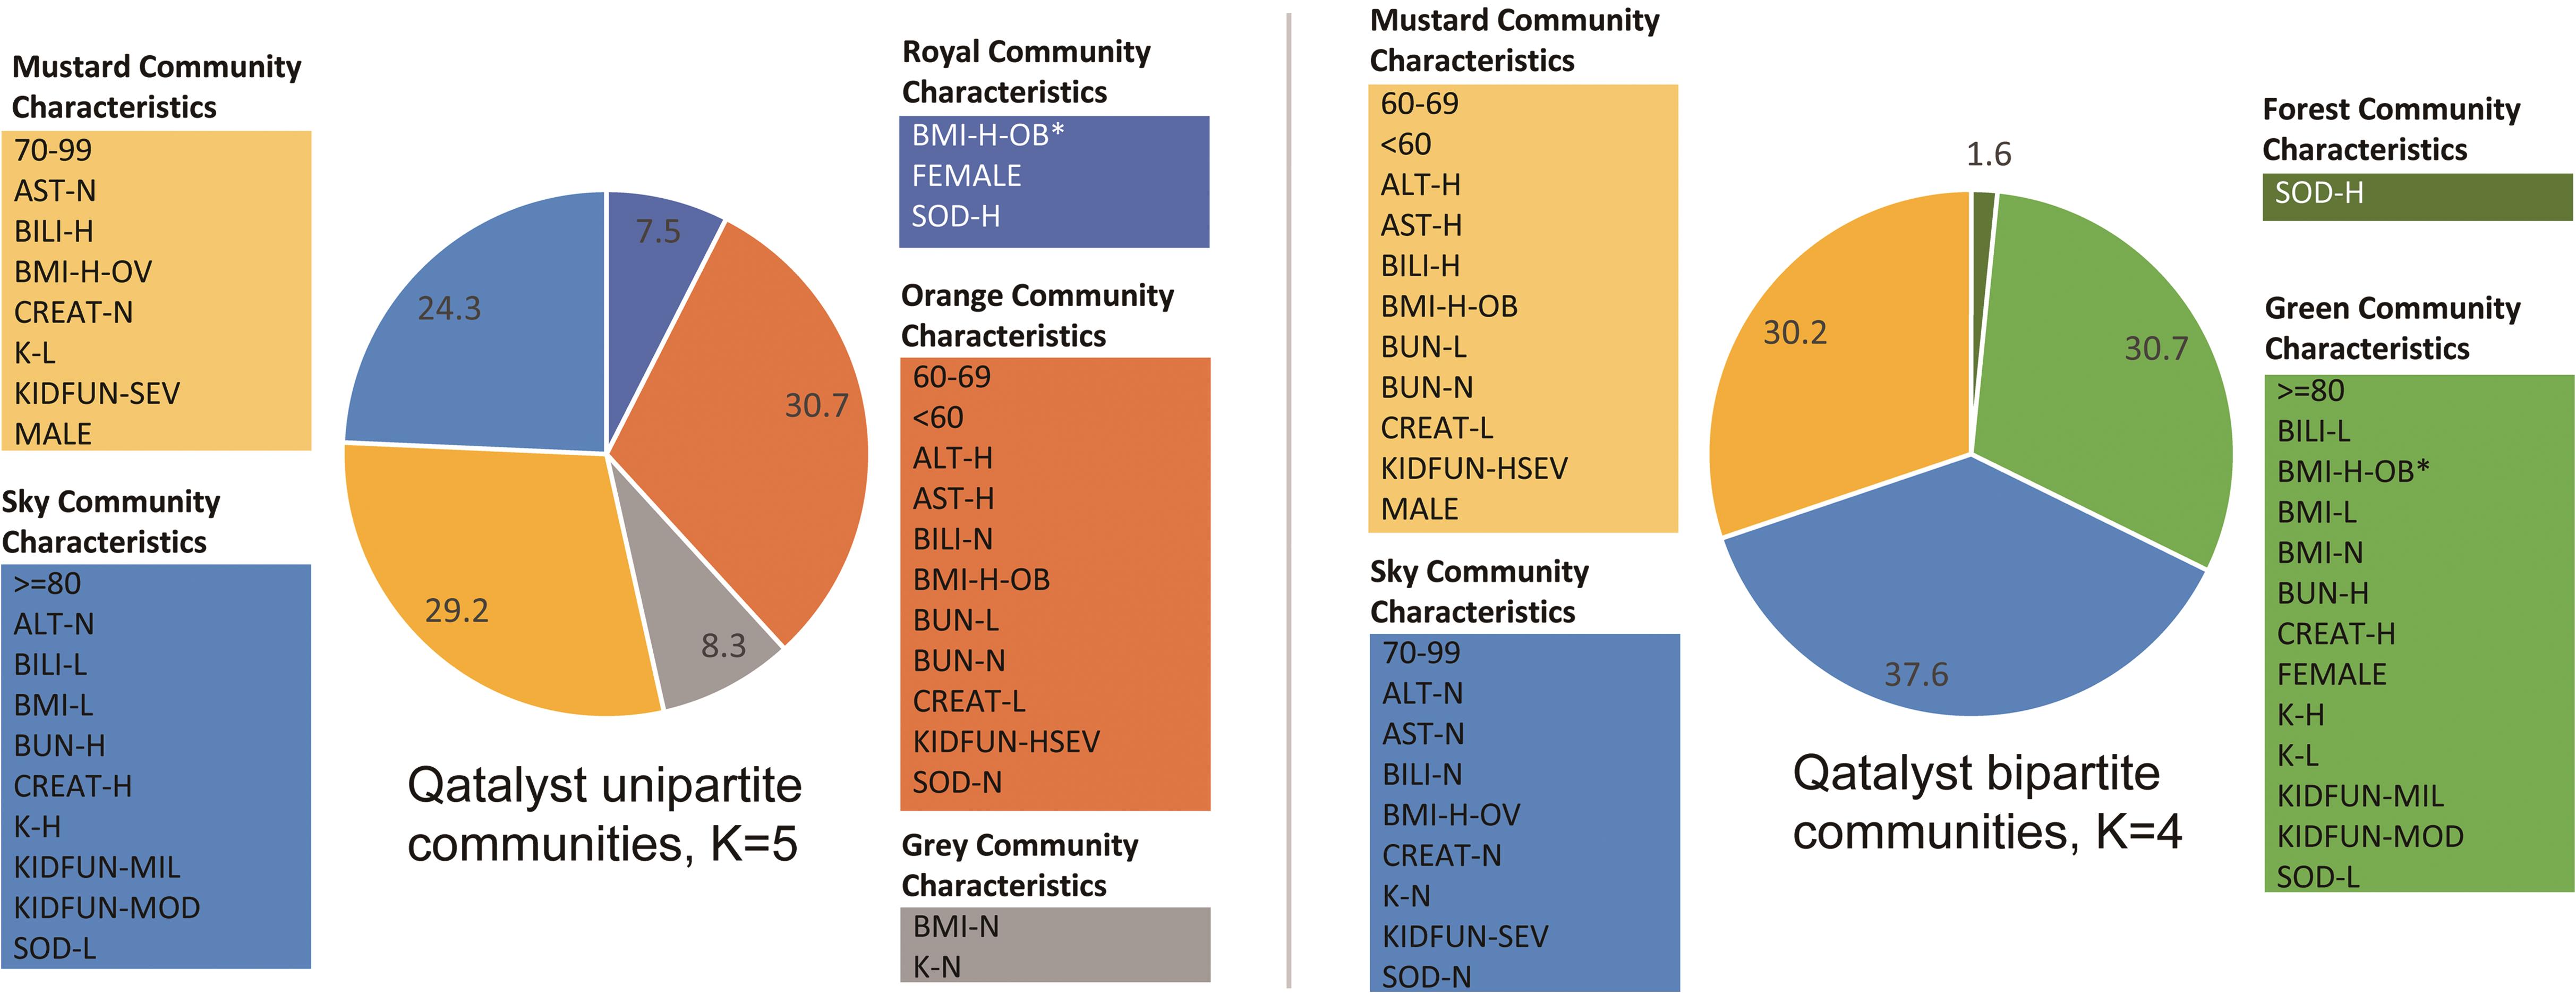 Characteristics of communities found by Qatalyst, unipartite <italic>vs.</italic> bipartite.